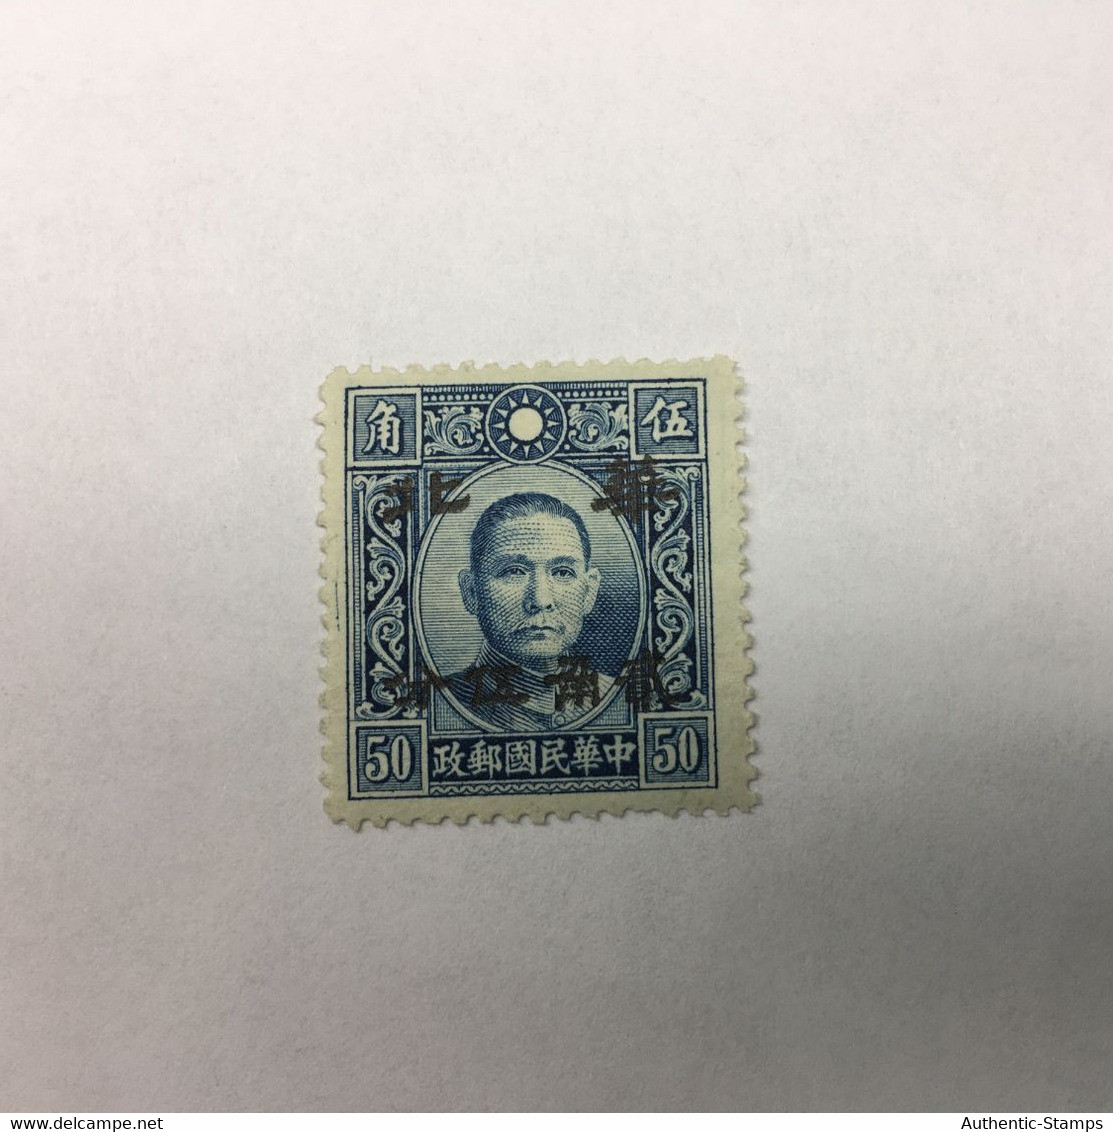 CHINA STAMP, USED, TIMBRO, STEMPEL, CINA, CHINE, LIST 5805 - 1941-45 China Dela Norte